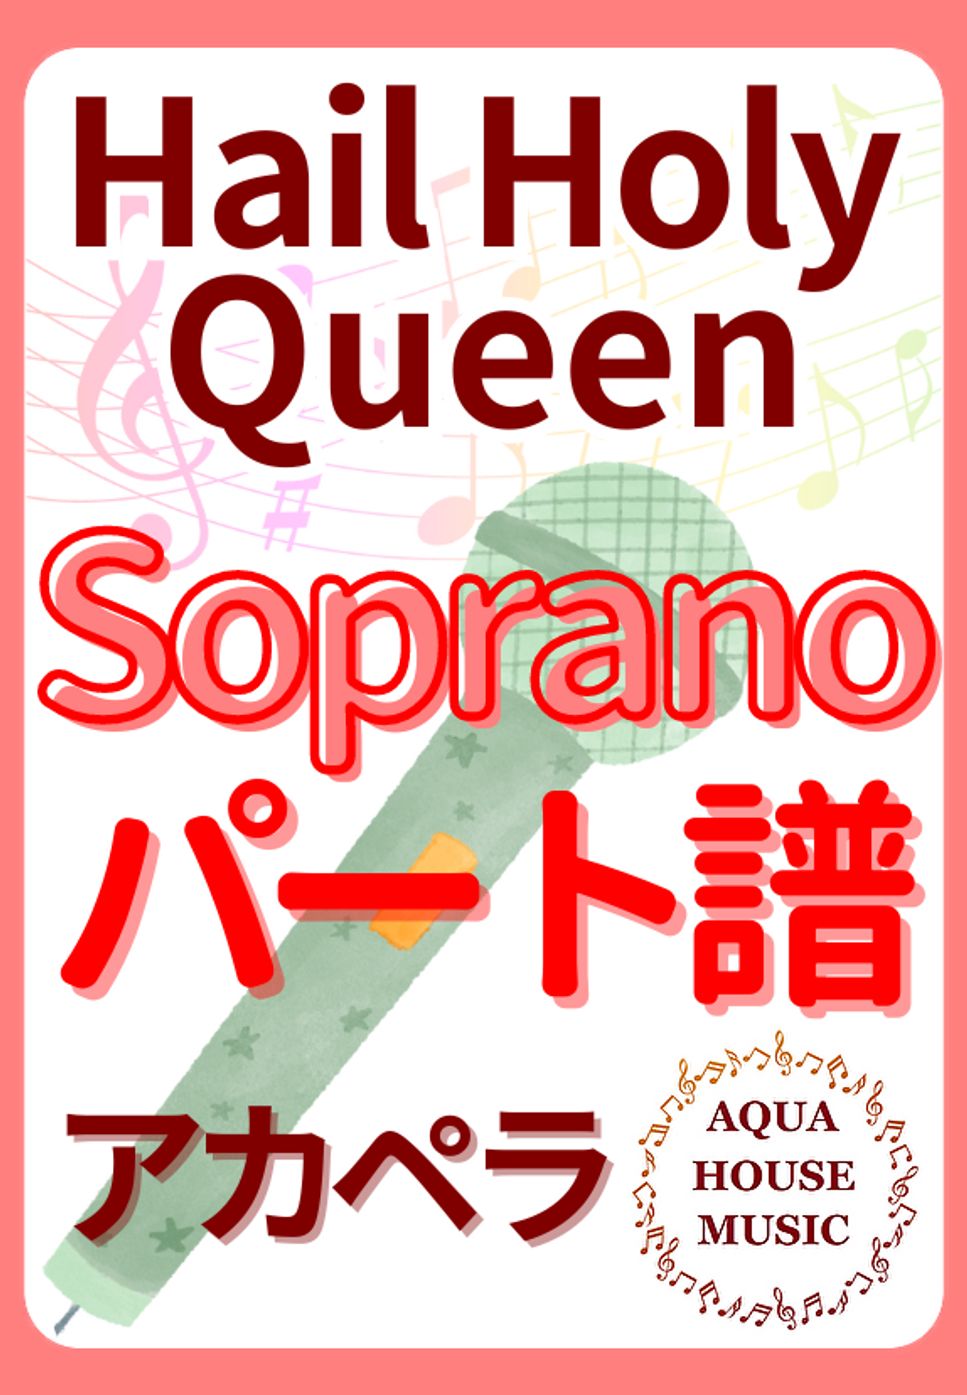 Hail Holy Queen (アカペラ楽譜♪Sopranoパート譜) by 飯田 亜紗子